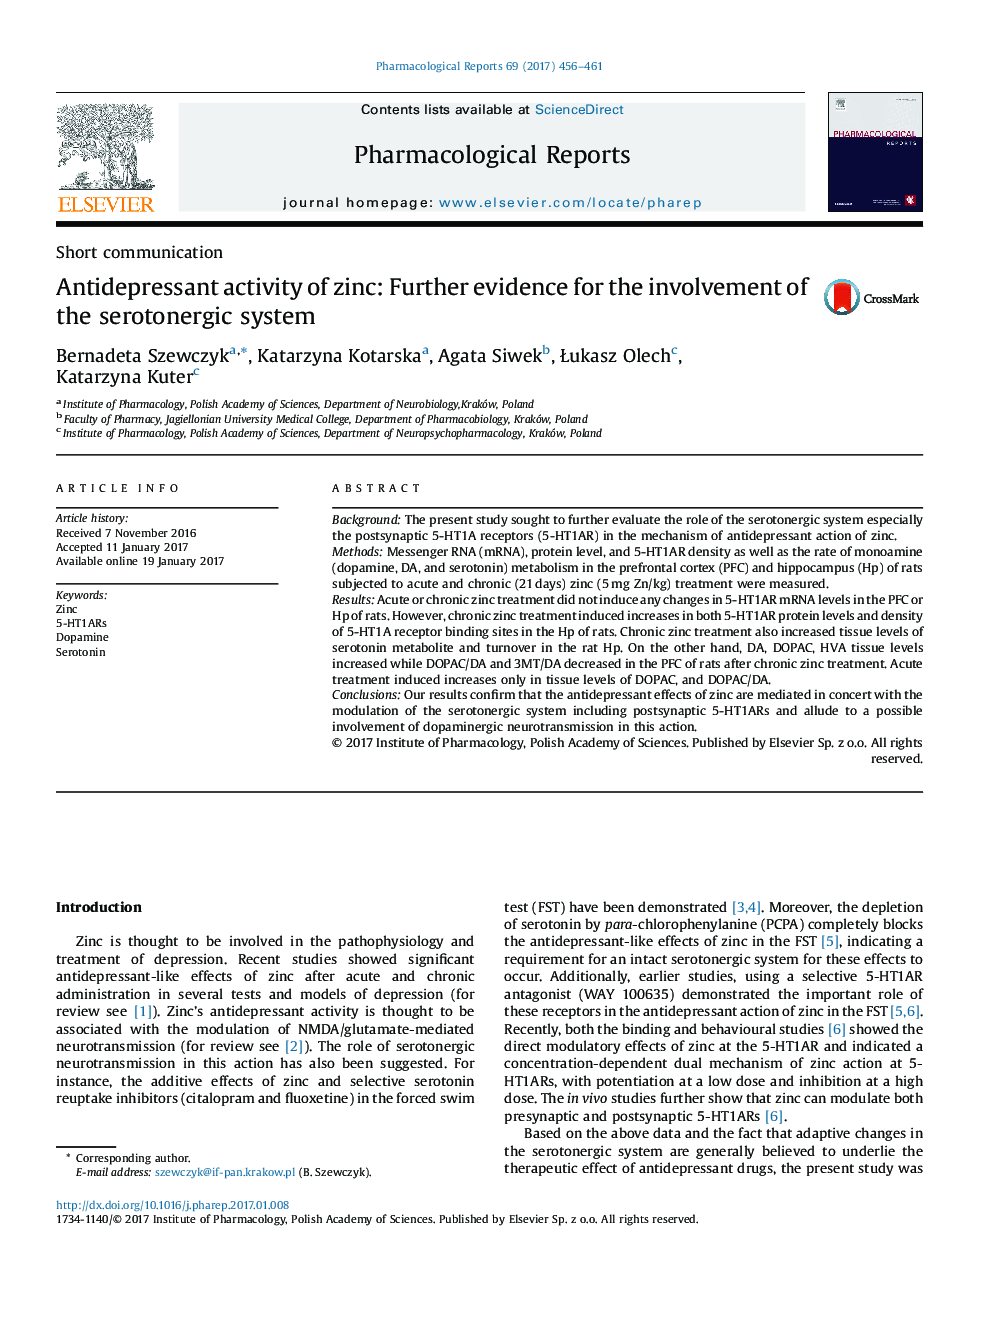 Short communicationAntidepressant activity of zinc: Further evidence for the involvement of the serotonergic system